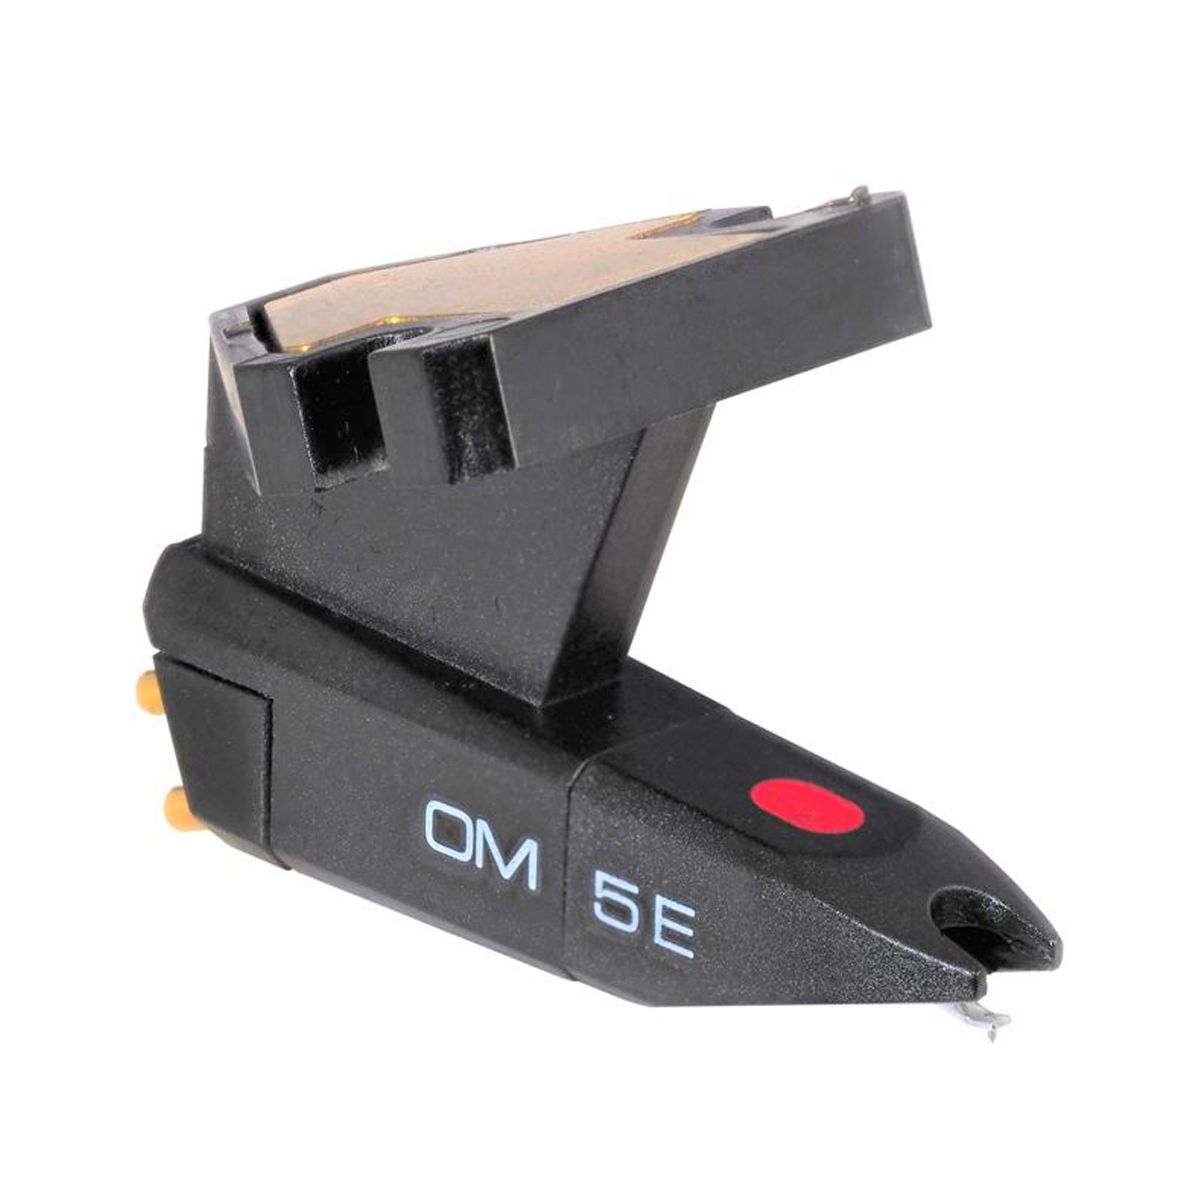 Ortofon OM 5E Turntable Cartridge